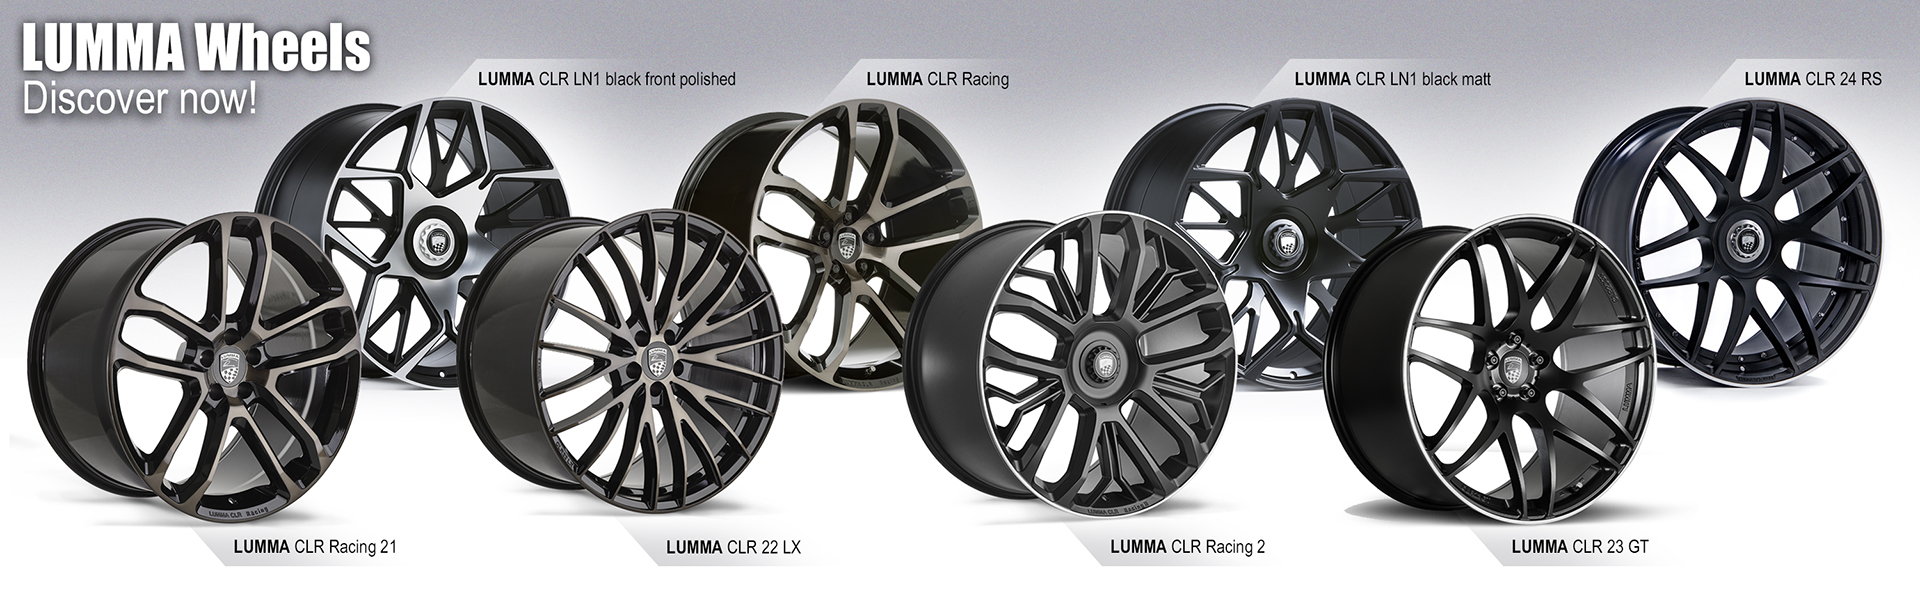 lumma-wheels-slider-1-eng-1